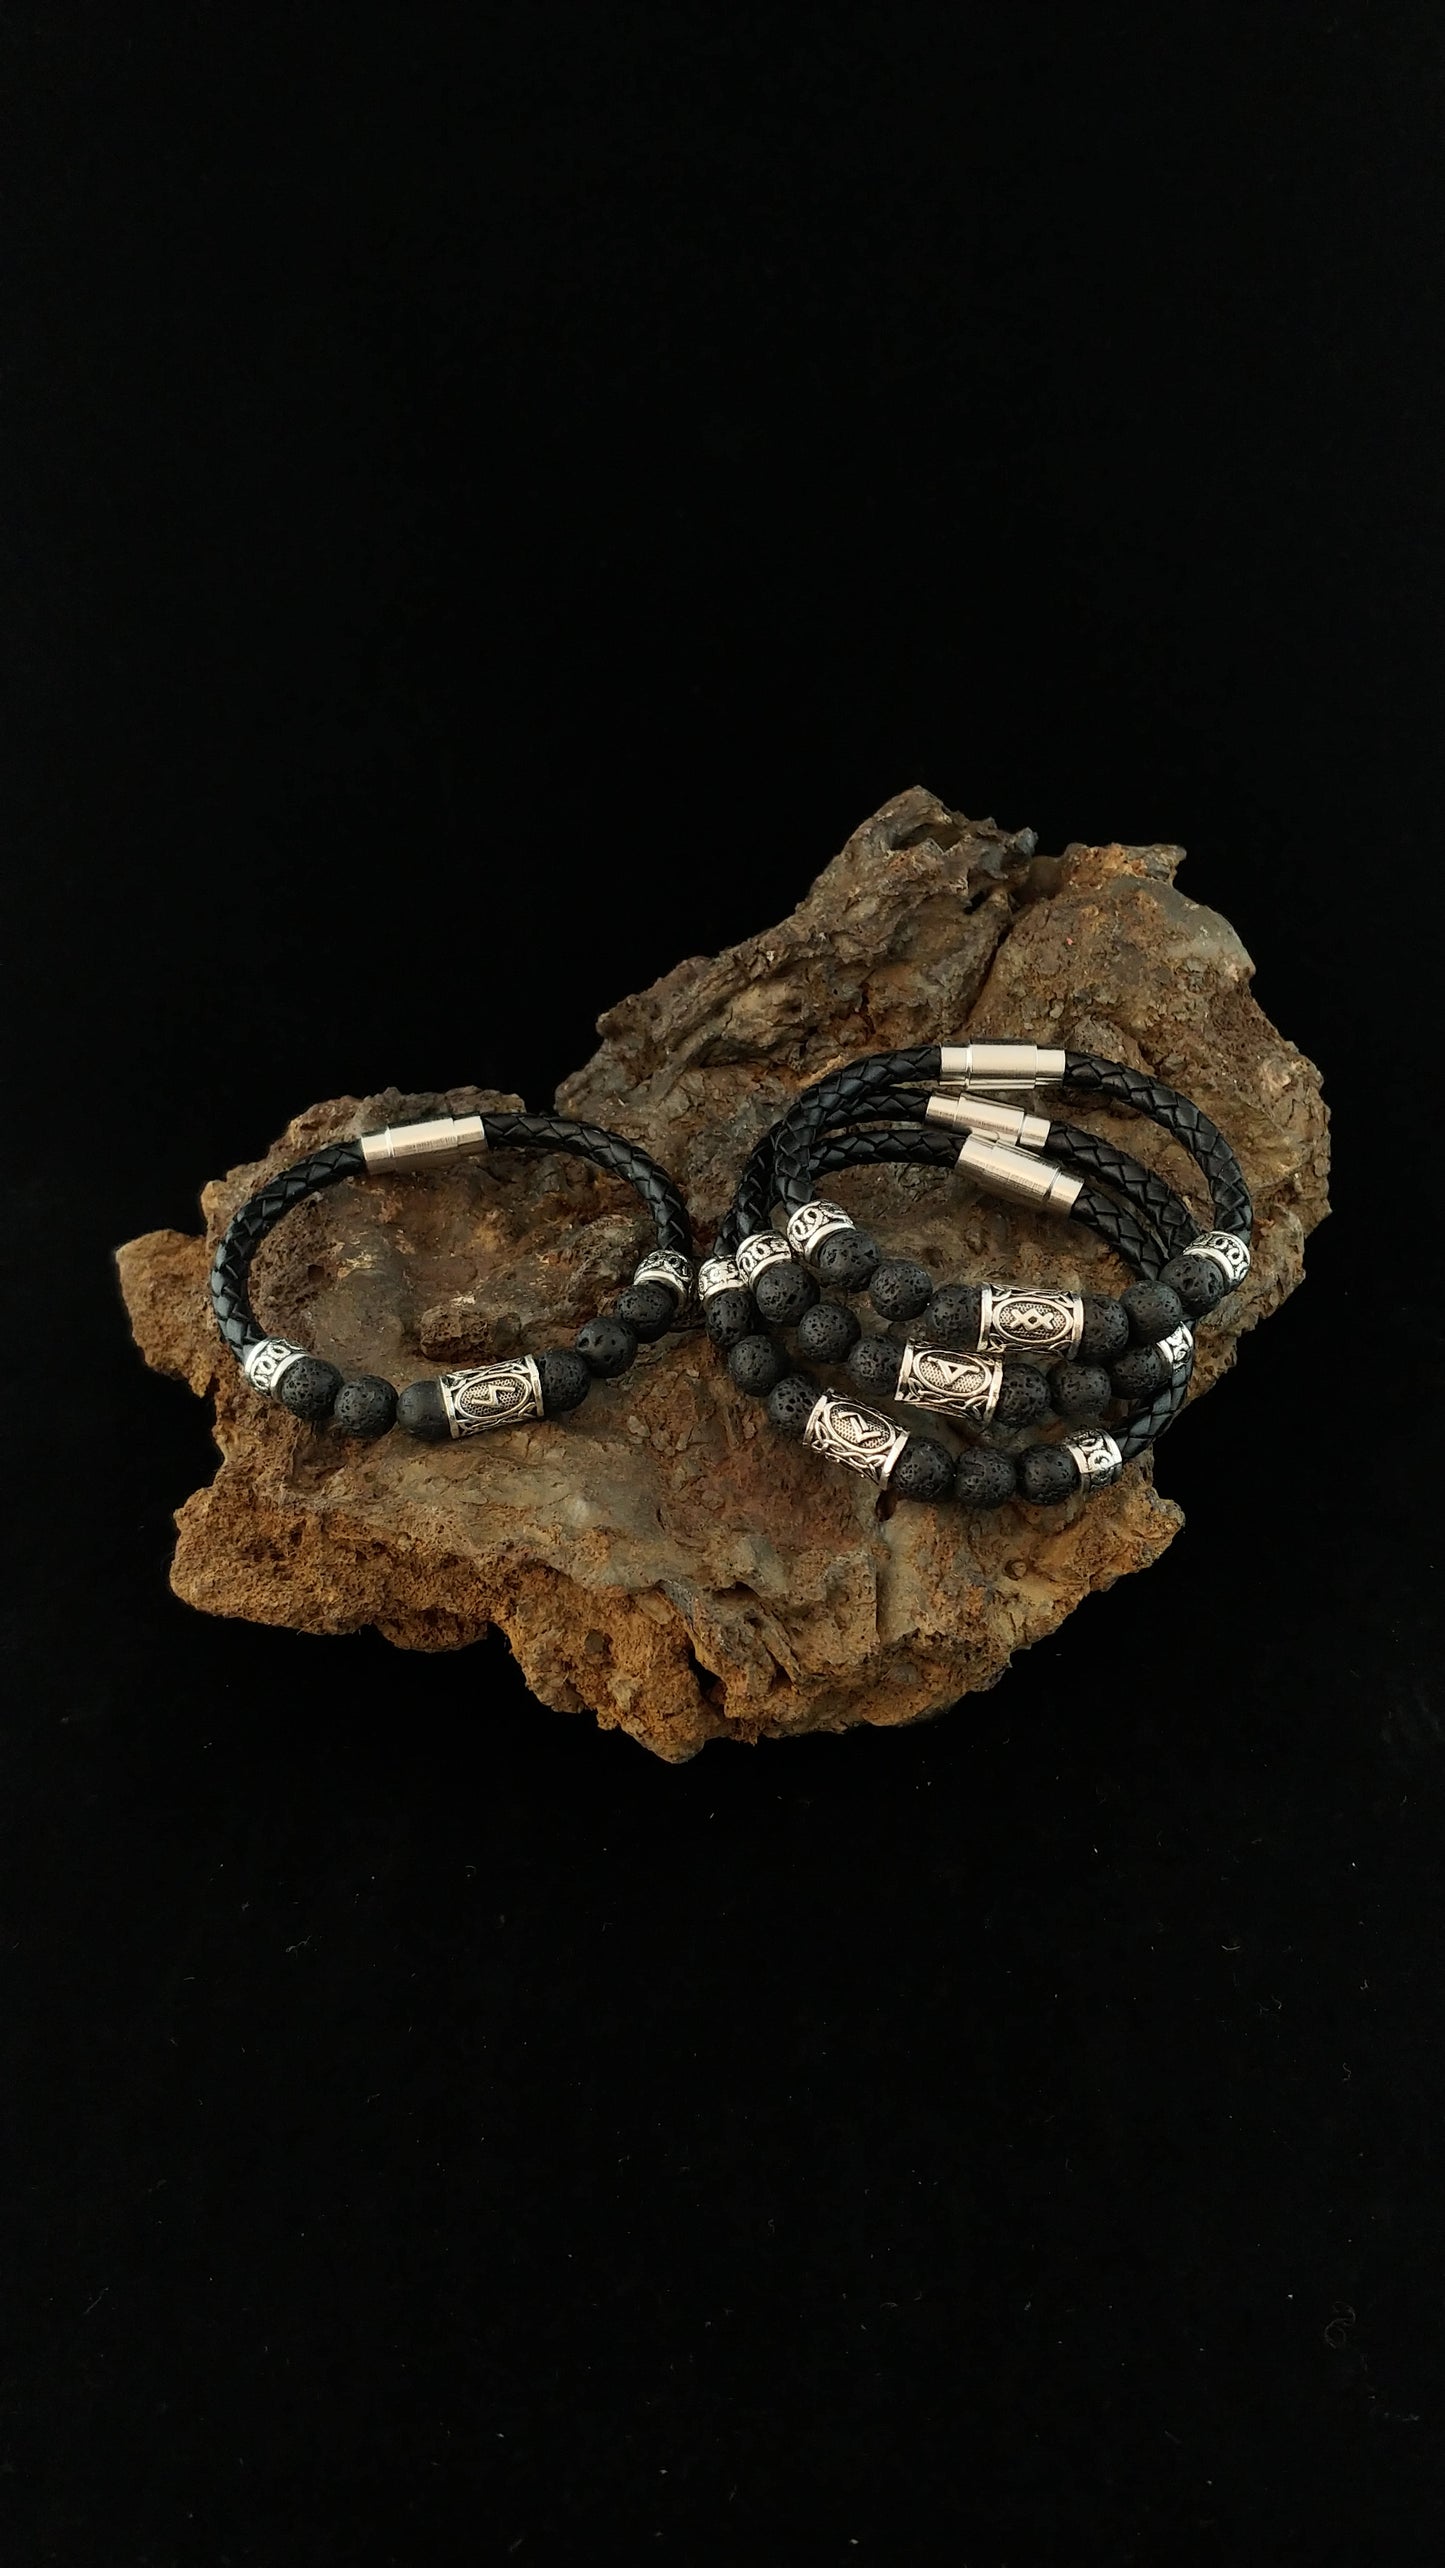 Icelandic Braided Leather Runes Lava Bracelet - Runic Viking Jewelry